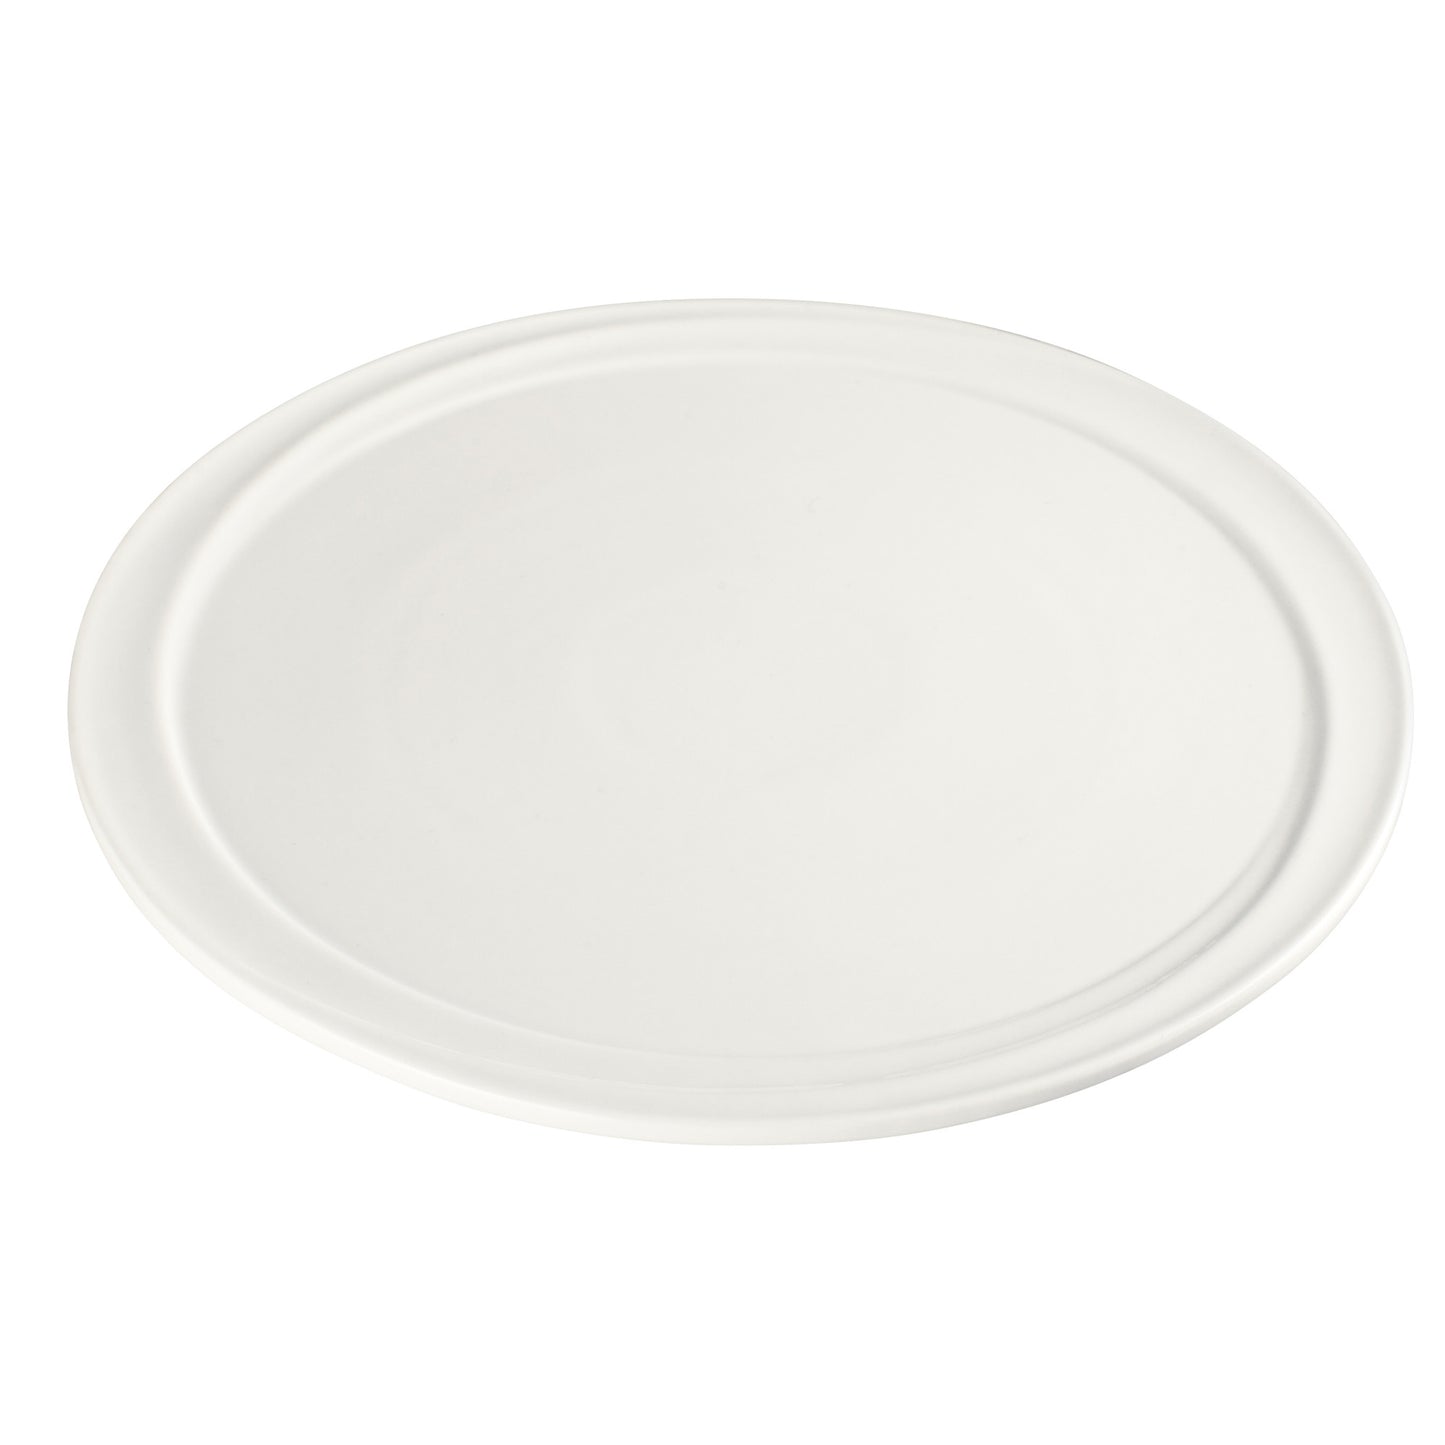 Mazarri 10" Dia Porcelain Round Plate - Bright White (12 pieces/case)